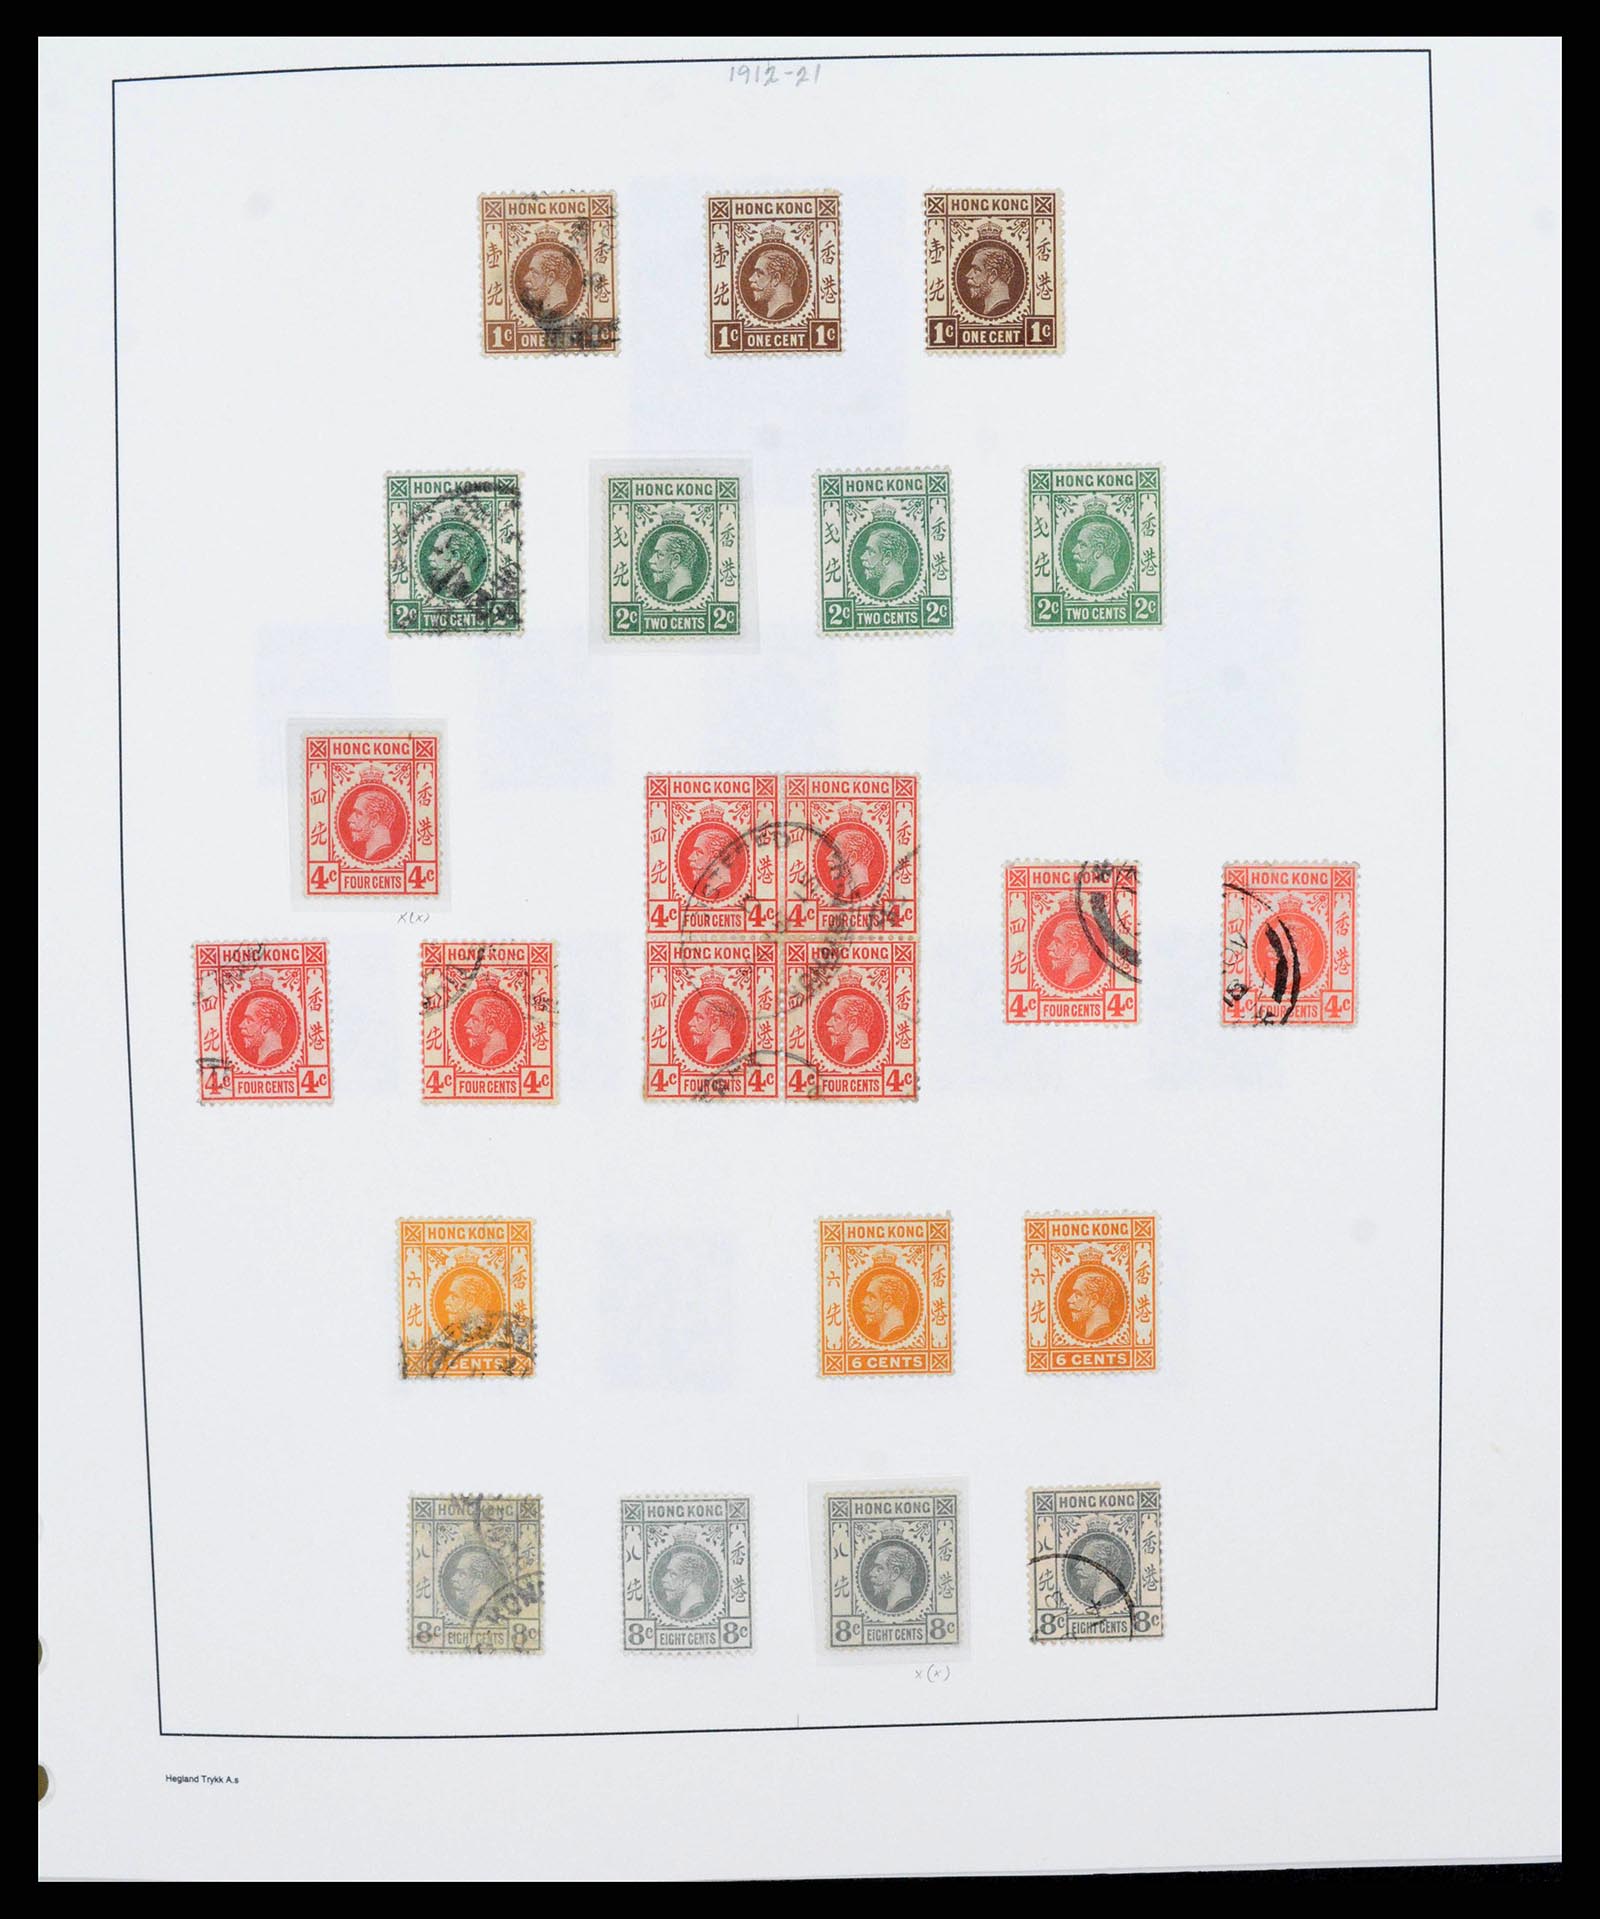 37955 0023 - Stamp collection 37955 Hong Kong supercollection 1862-2007.